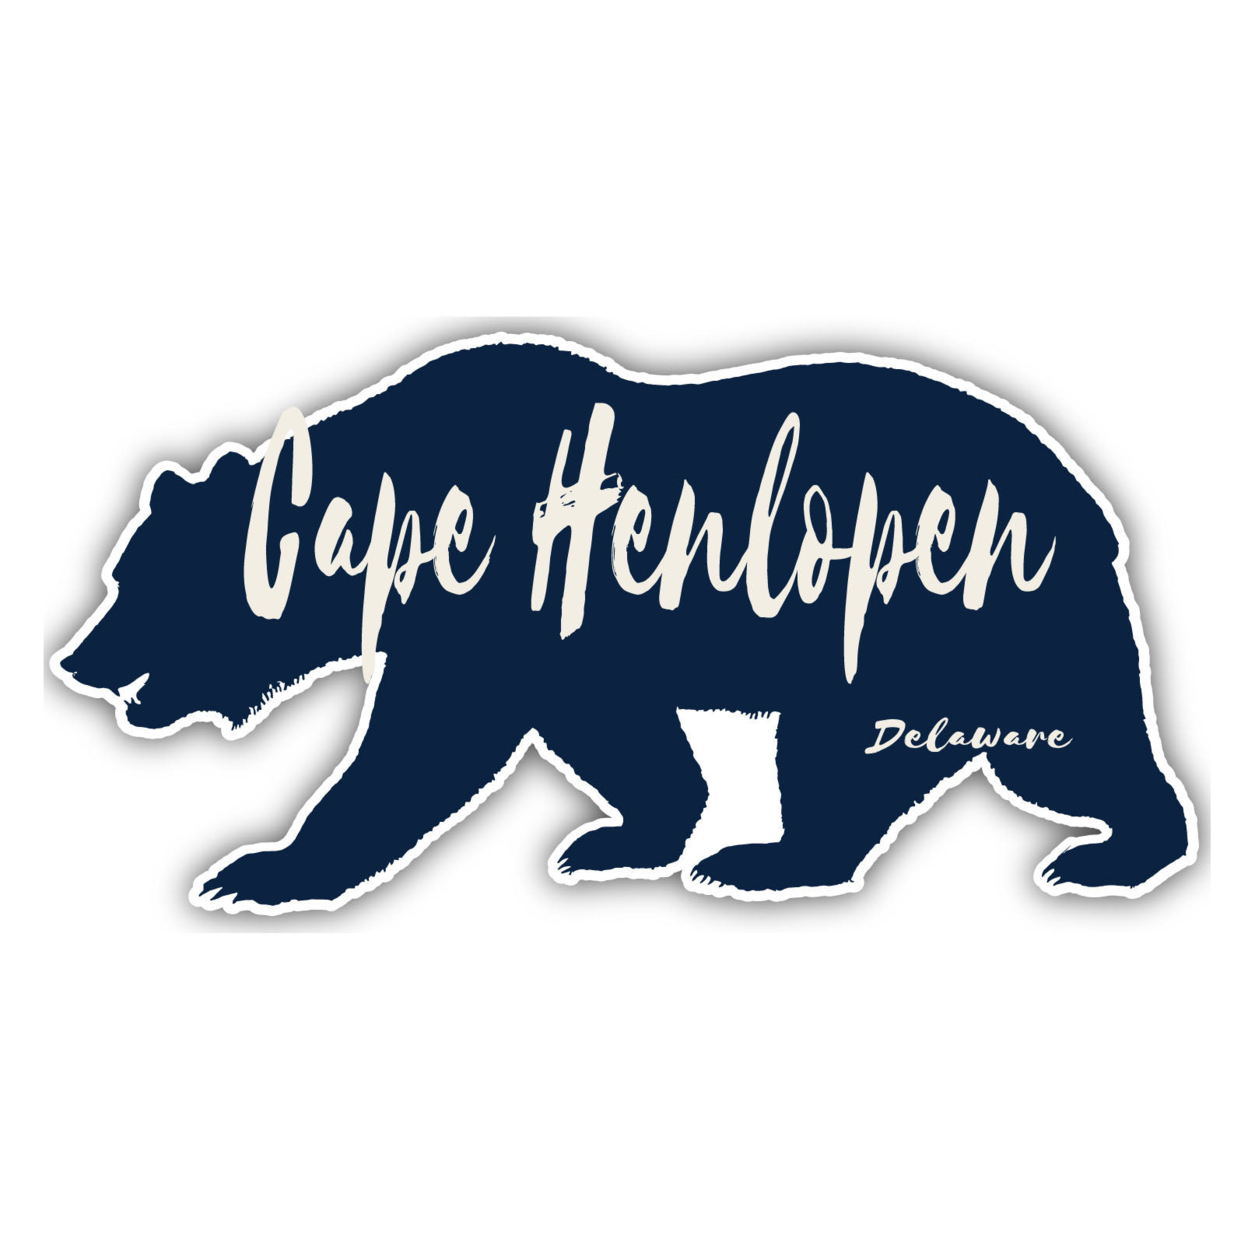 Cape Henlopen Delaware Souvenir Decorative Stickers (Choose Theme And Size) - Single Unit, 2-Inch, Camp Life